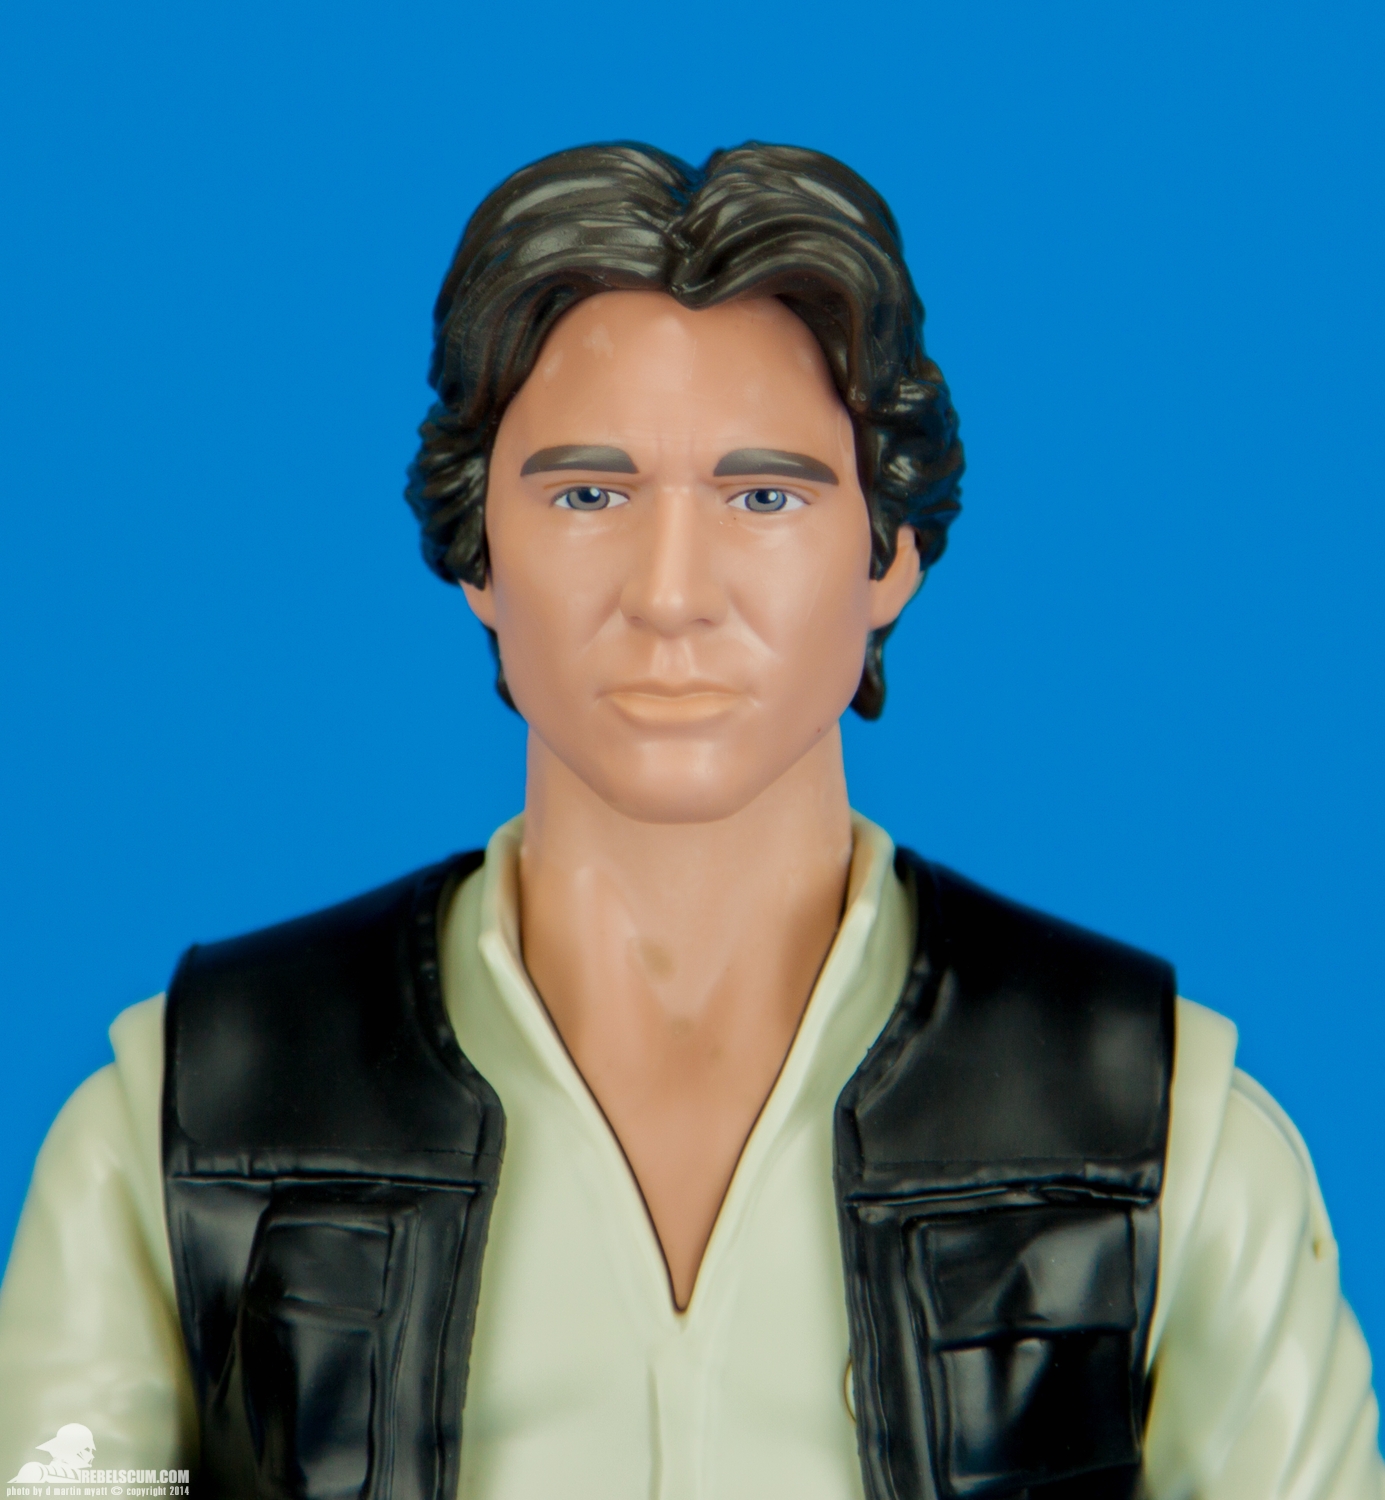 Disney-Store-Exclusive-Talking-Han-Solo-005.jpg